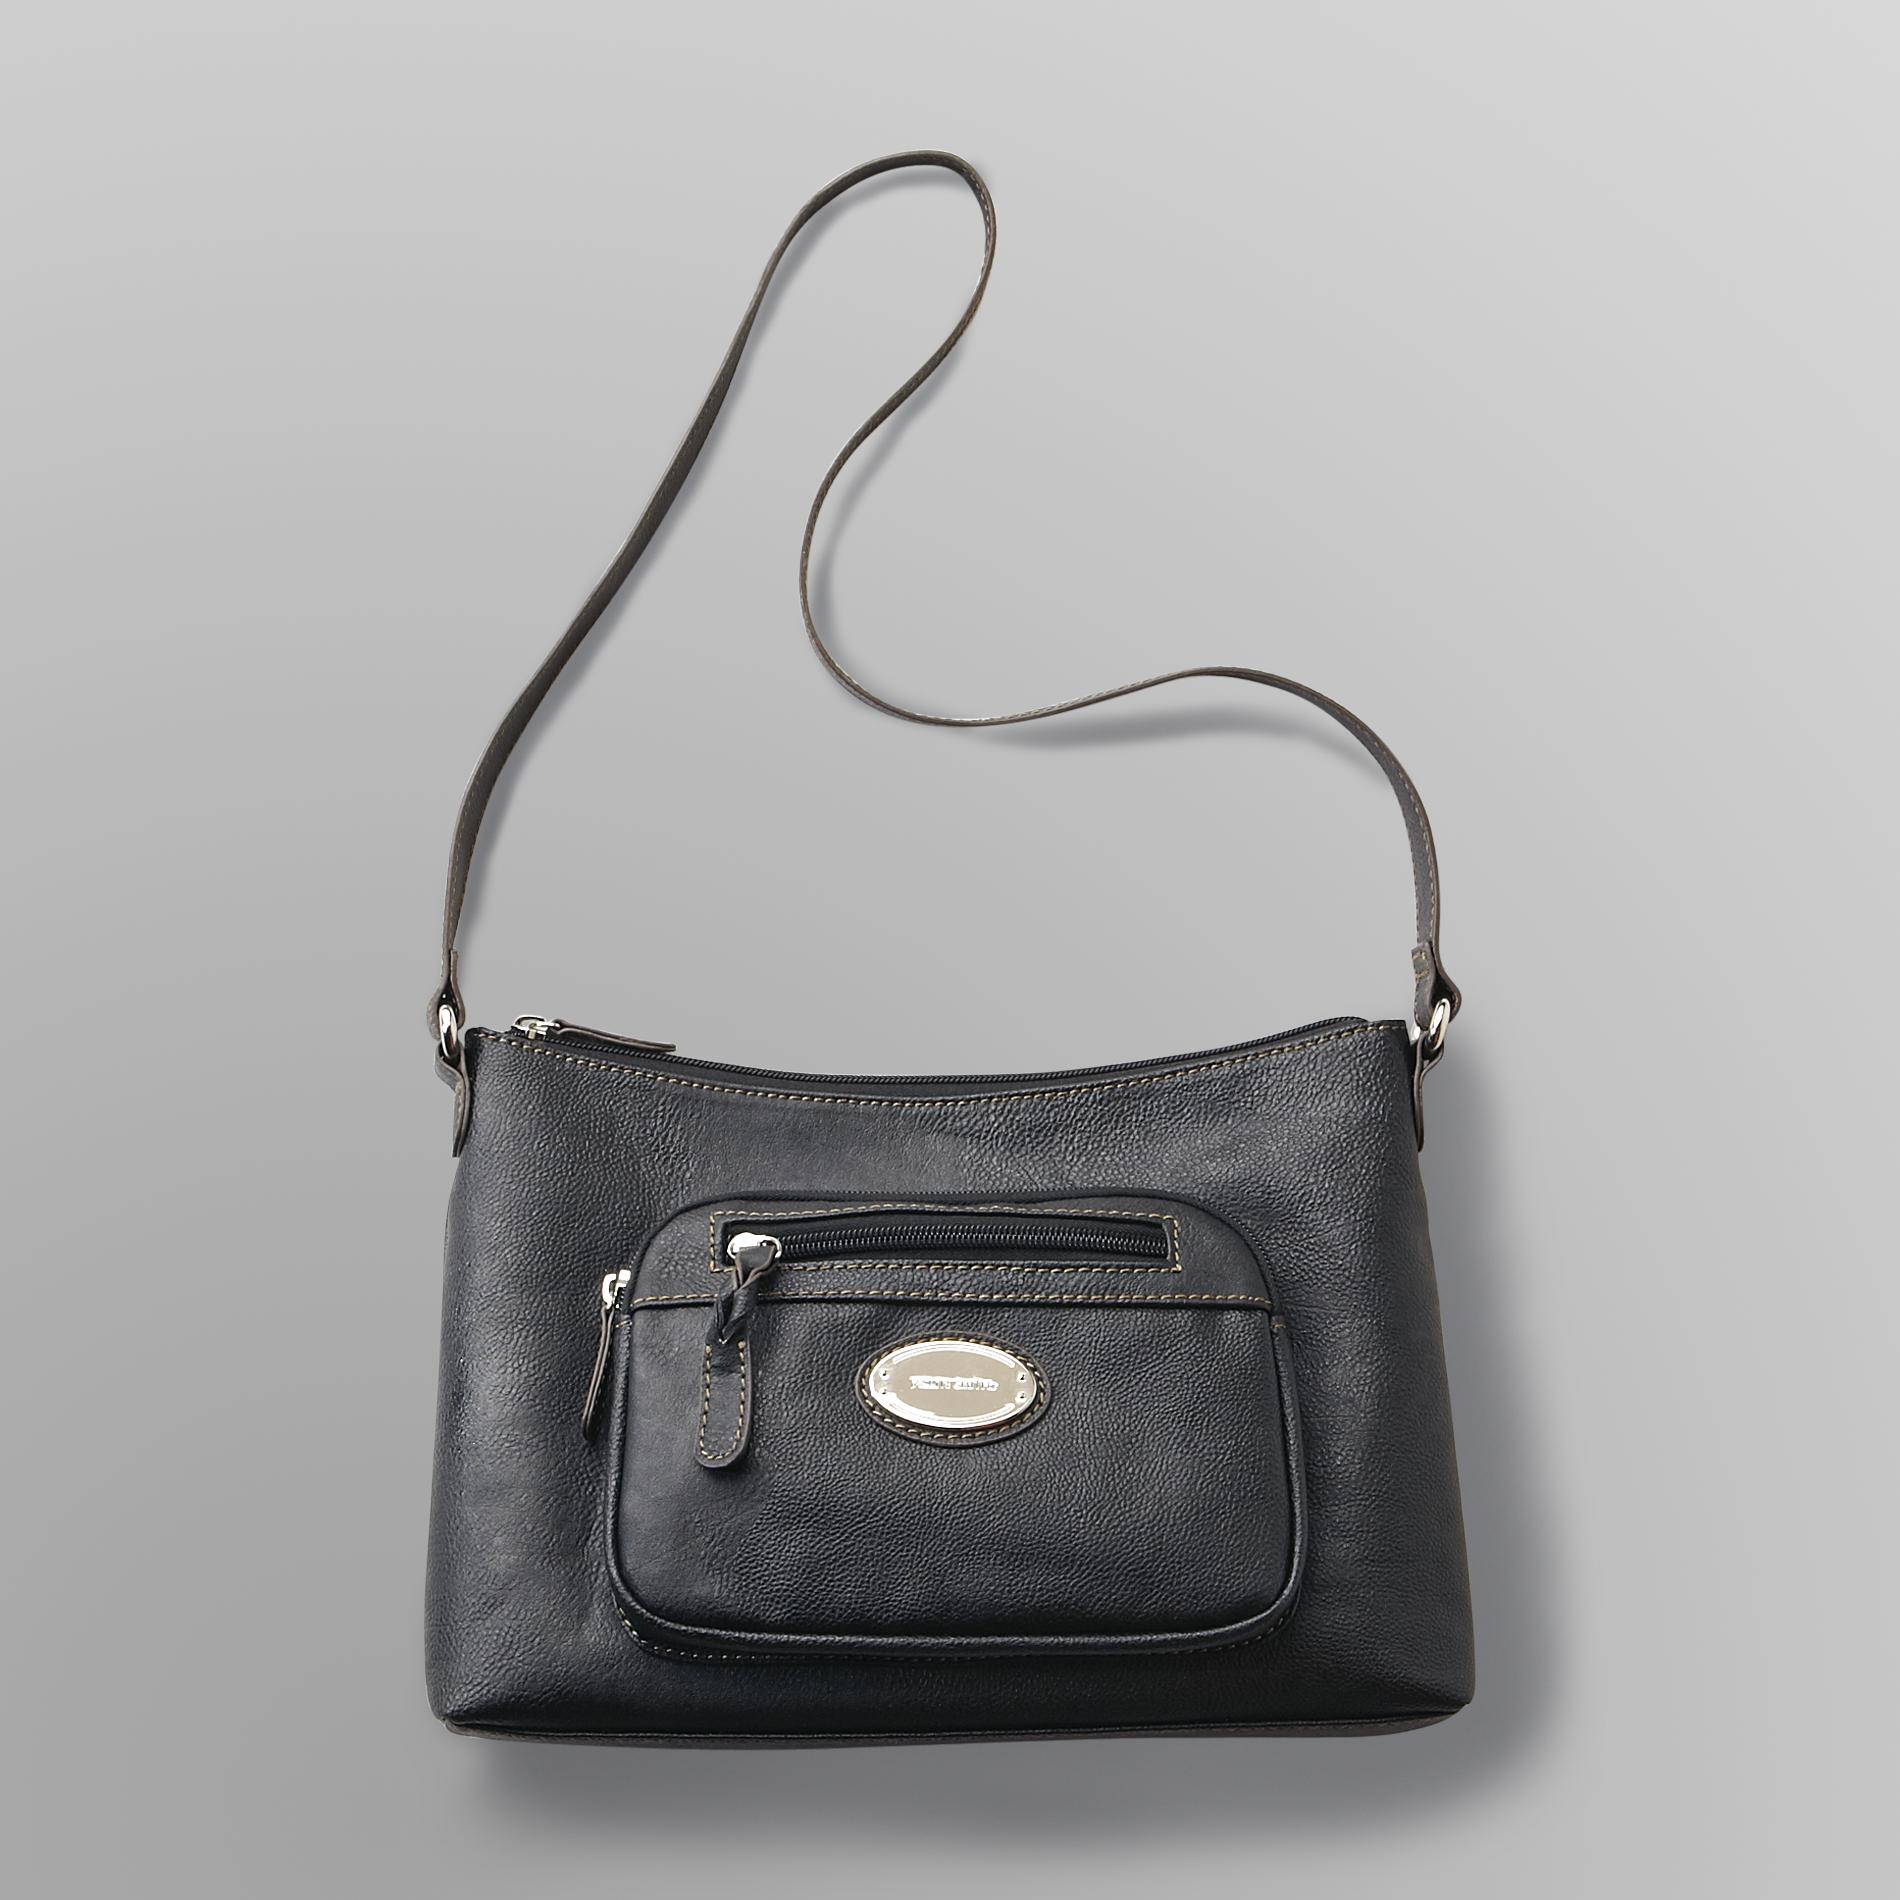 Jaclyn Smith Women's Ludlow Satchel Handbag